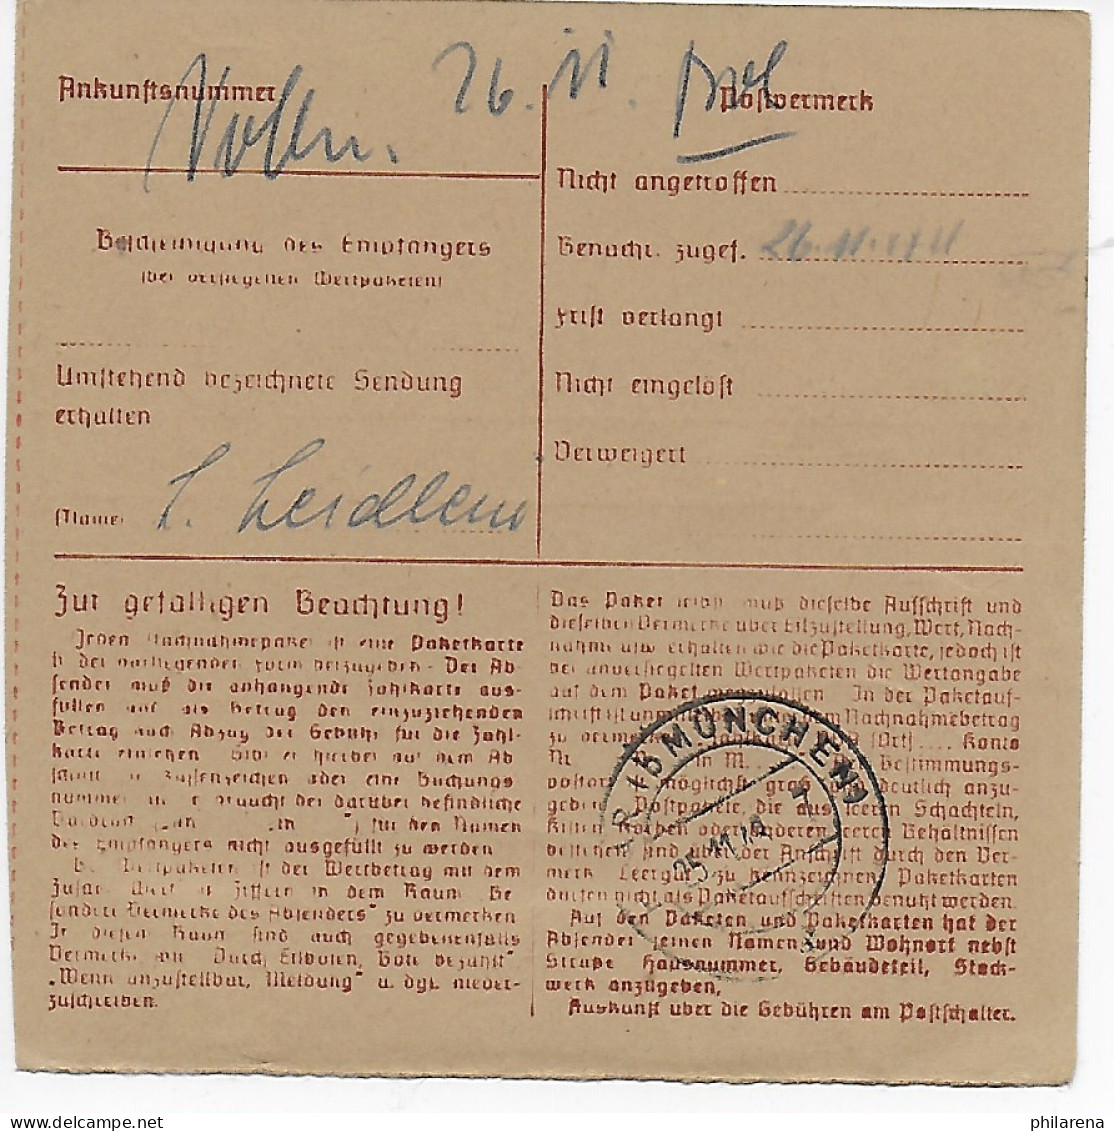 Paketkarte Hagen/Westf. Nach Haar, München 1948, MeF - Covers & Documents